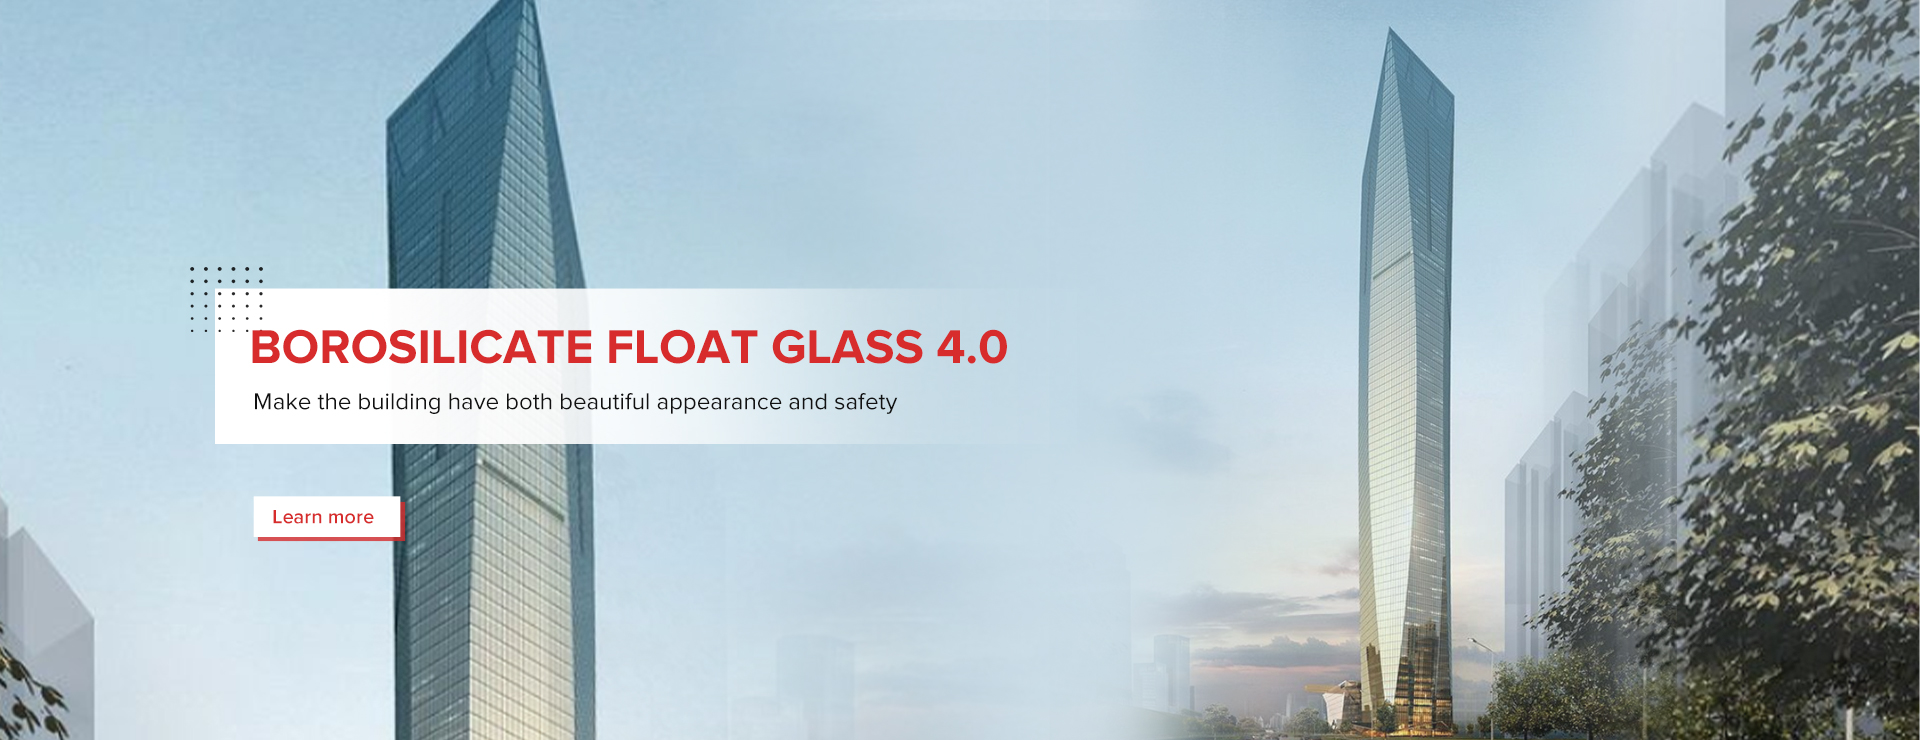 Borosilicate Float Glass 4.0